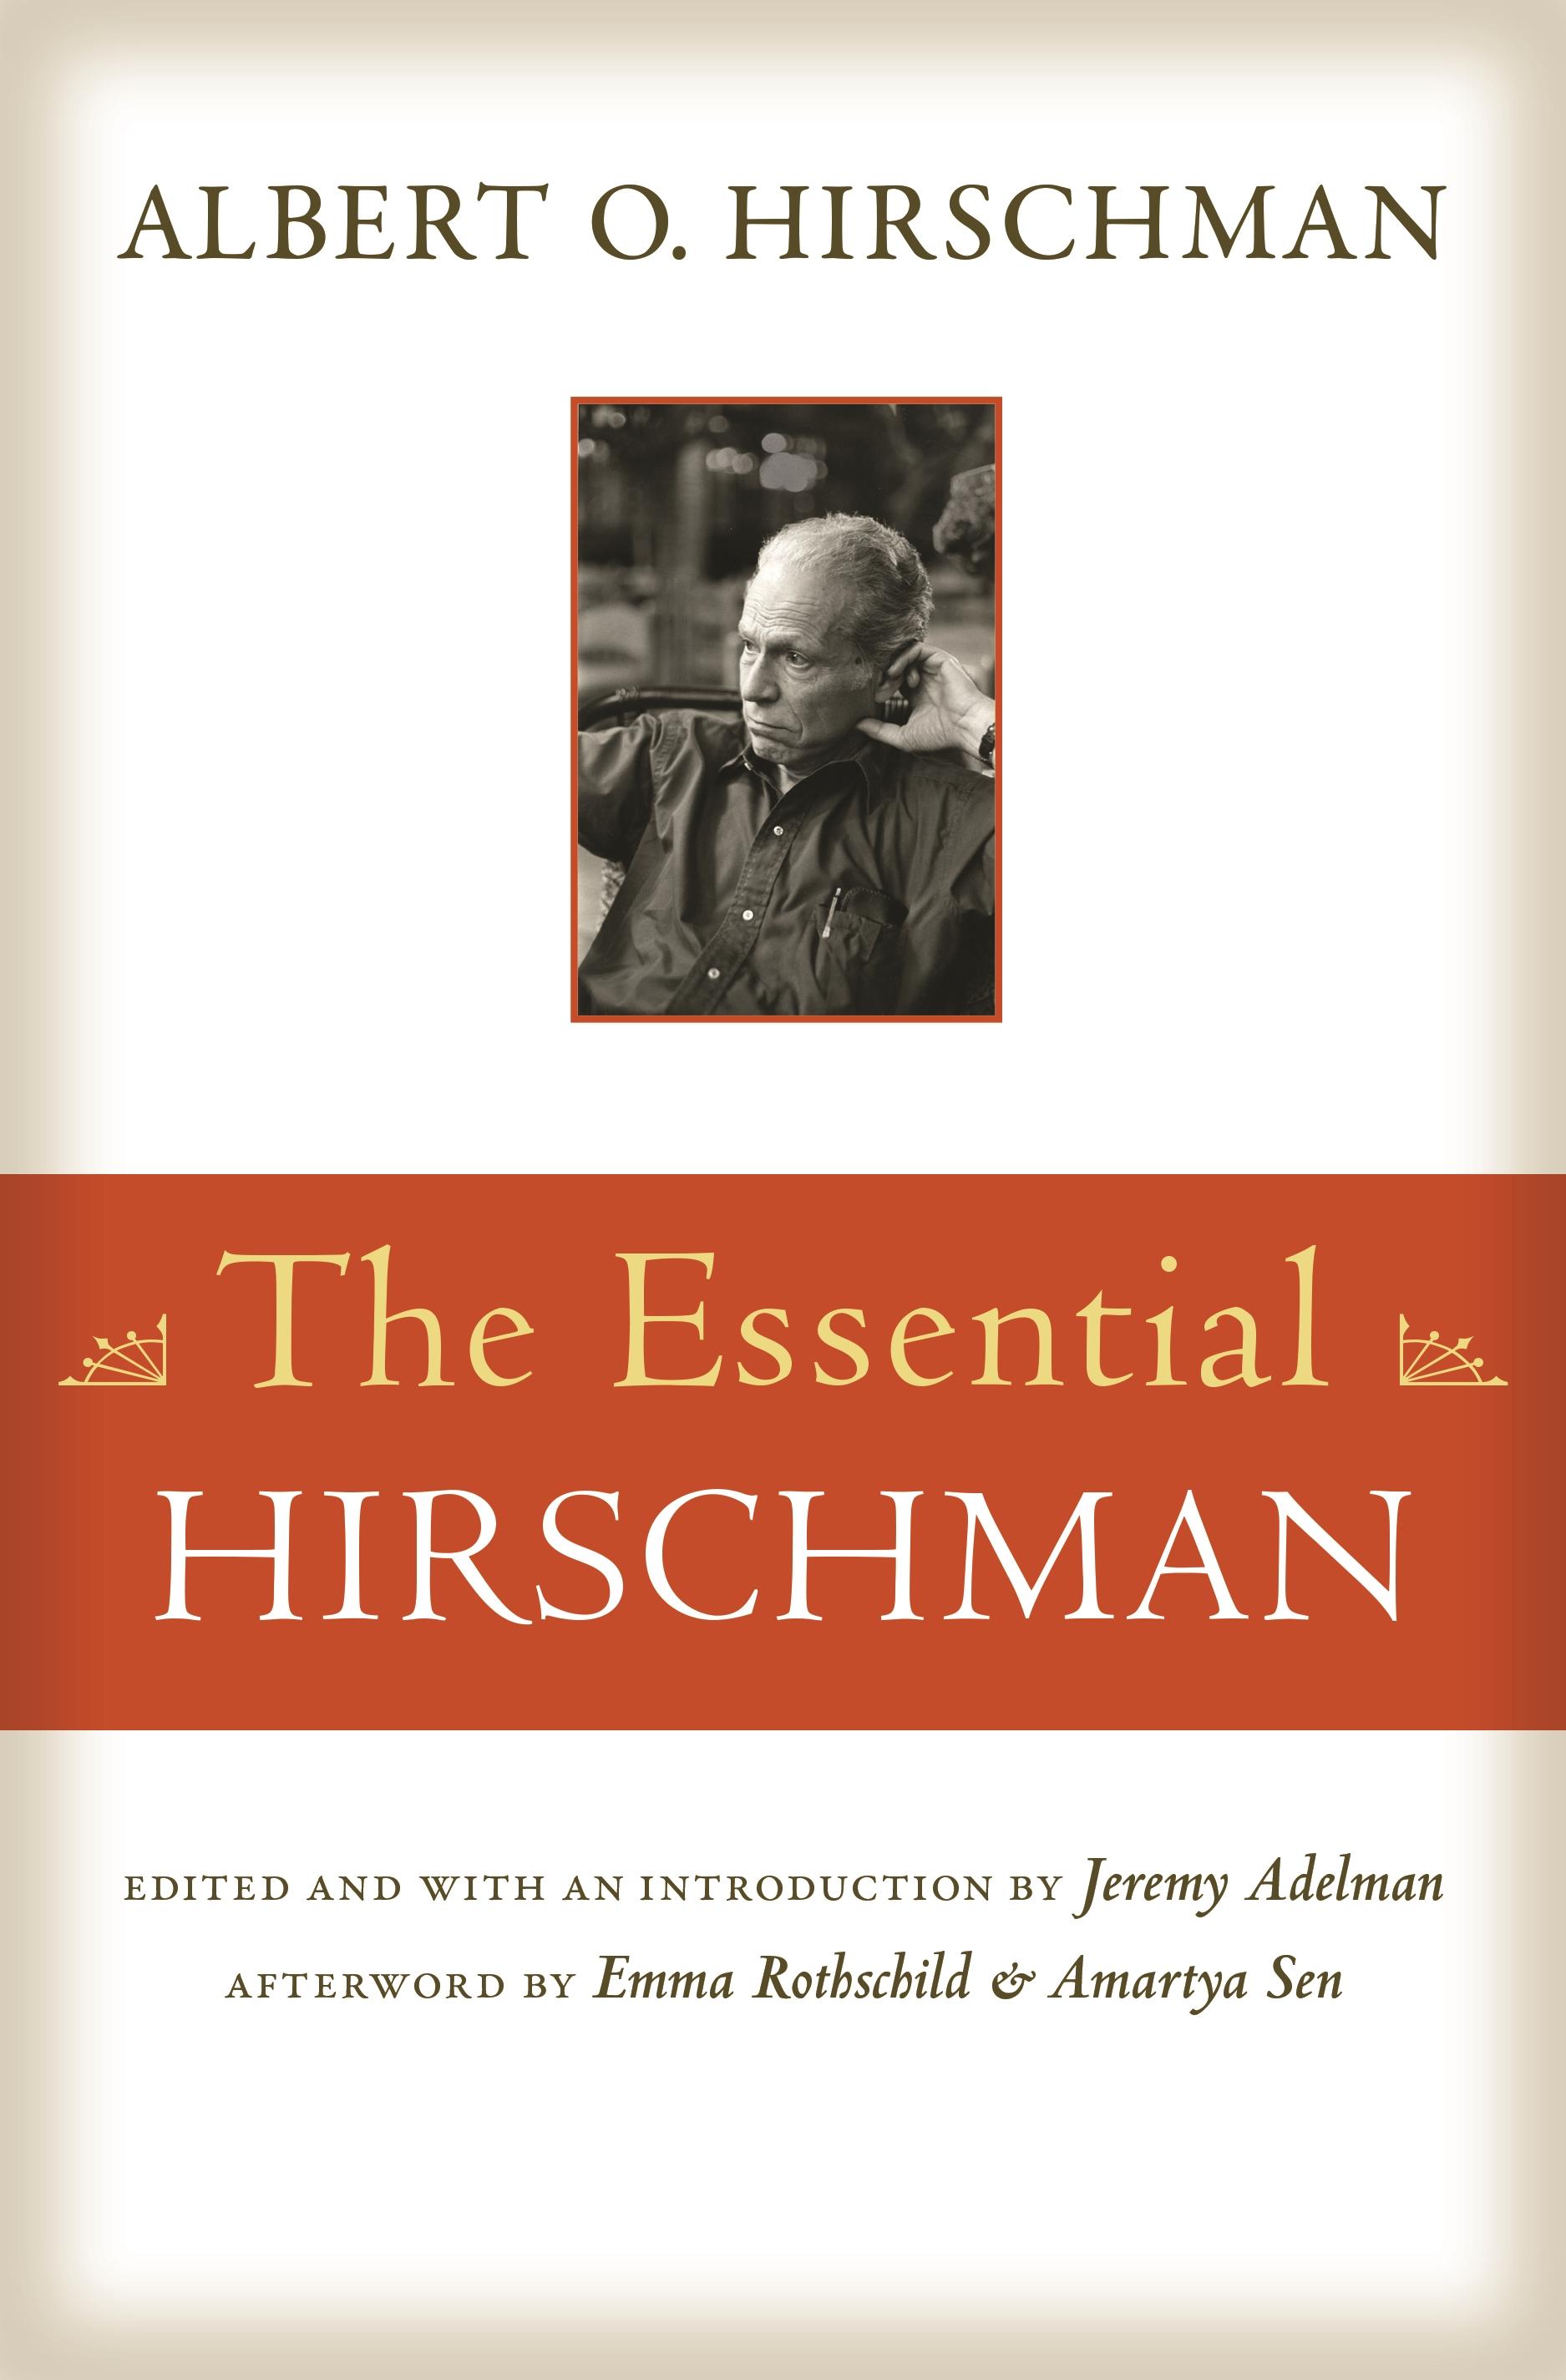 The Essential Hirschman / Albert O Hirschman / Taschenbuch / Kartoniert / Broschiert / Englisch / 2015 / Princeton University Press / EAN 9780691165677 - Hirschman, Albert O